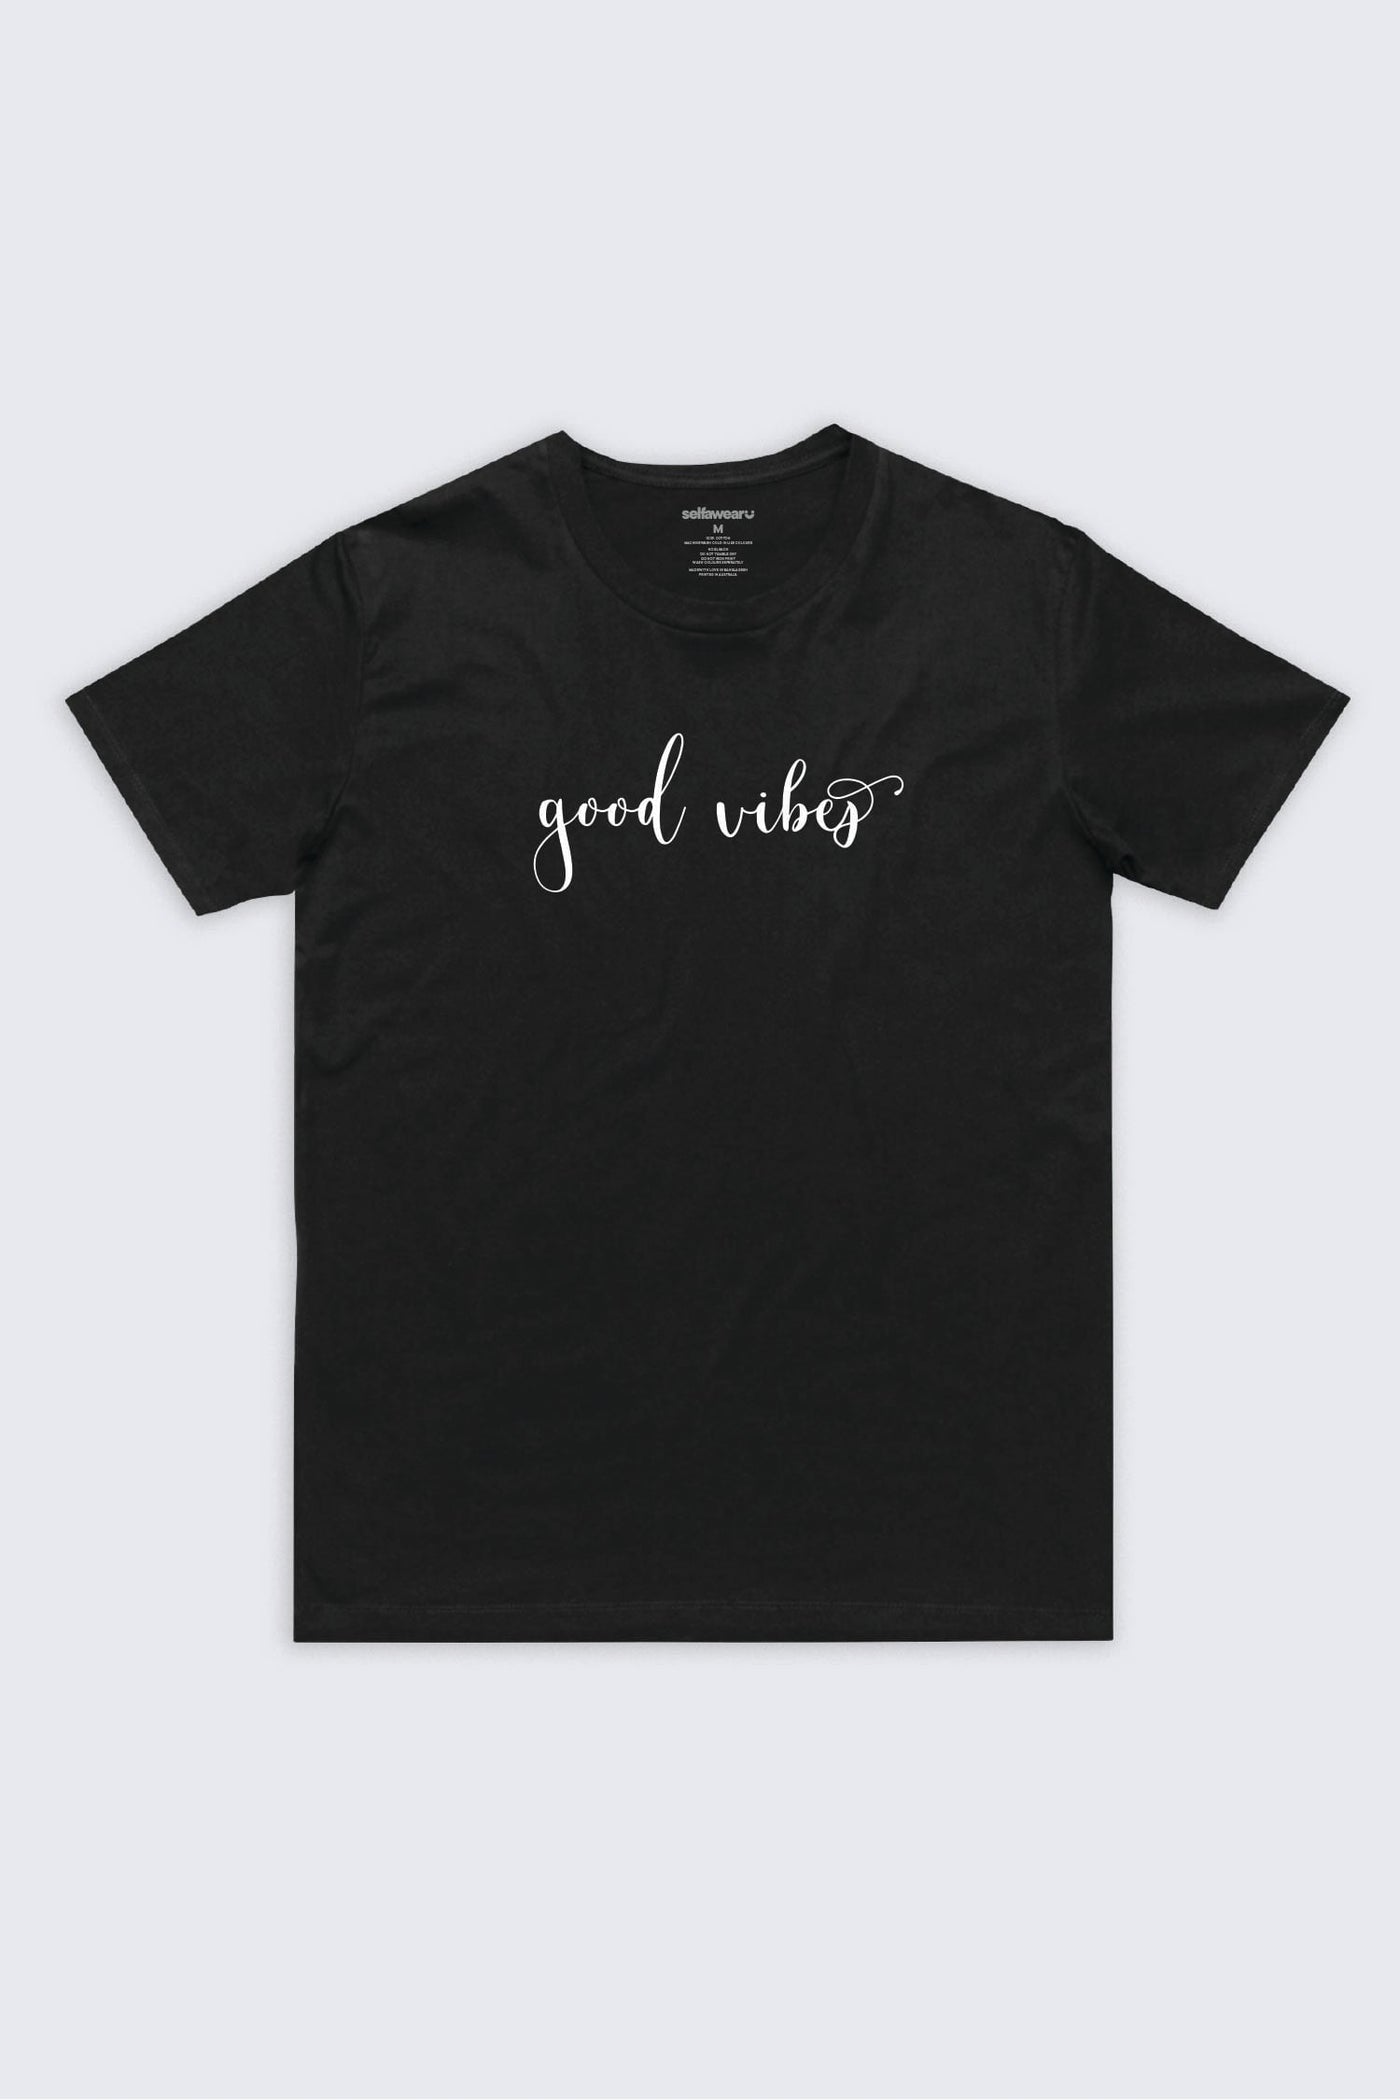 Good Vibes T-Shirt Black Shirts Selfawear 